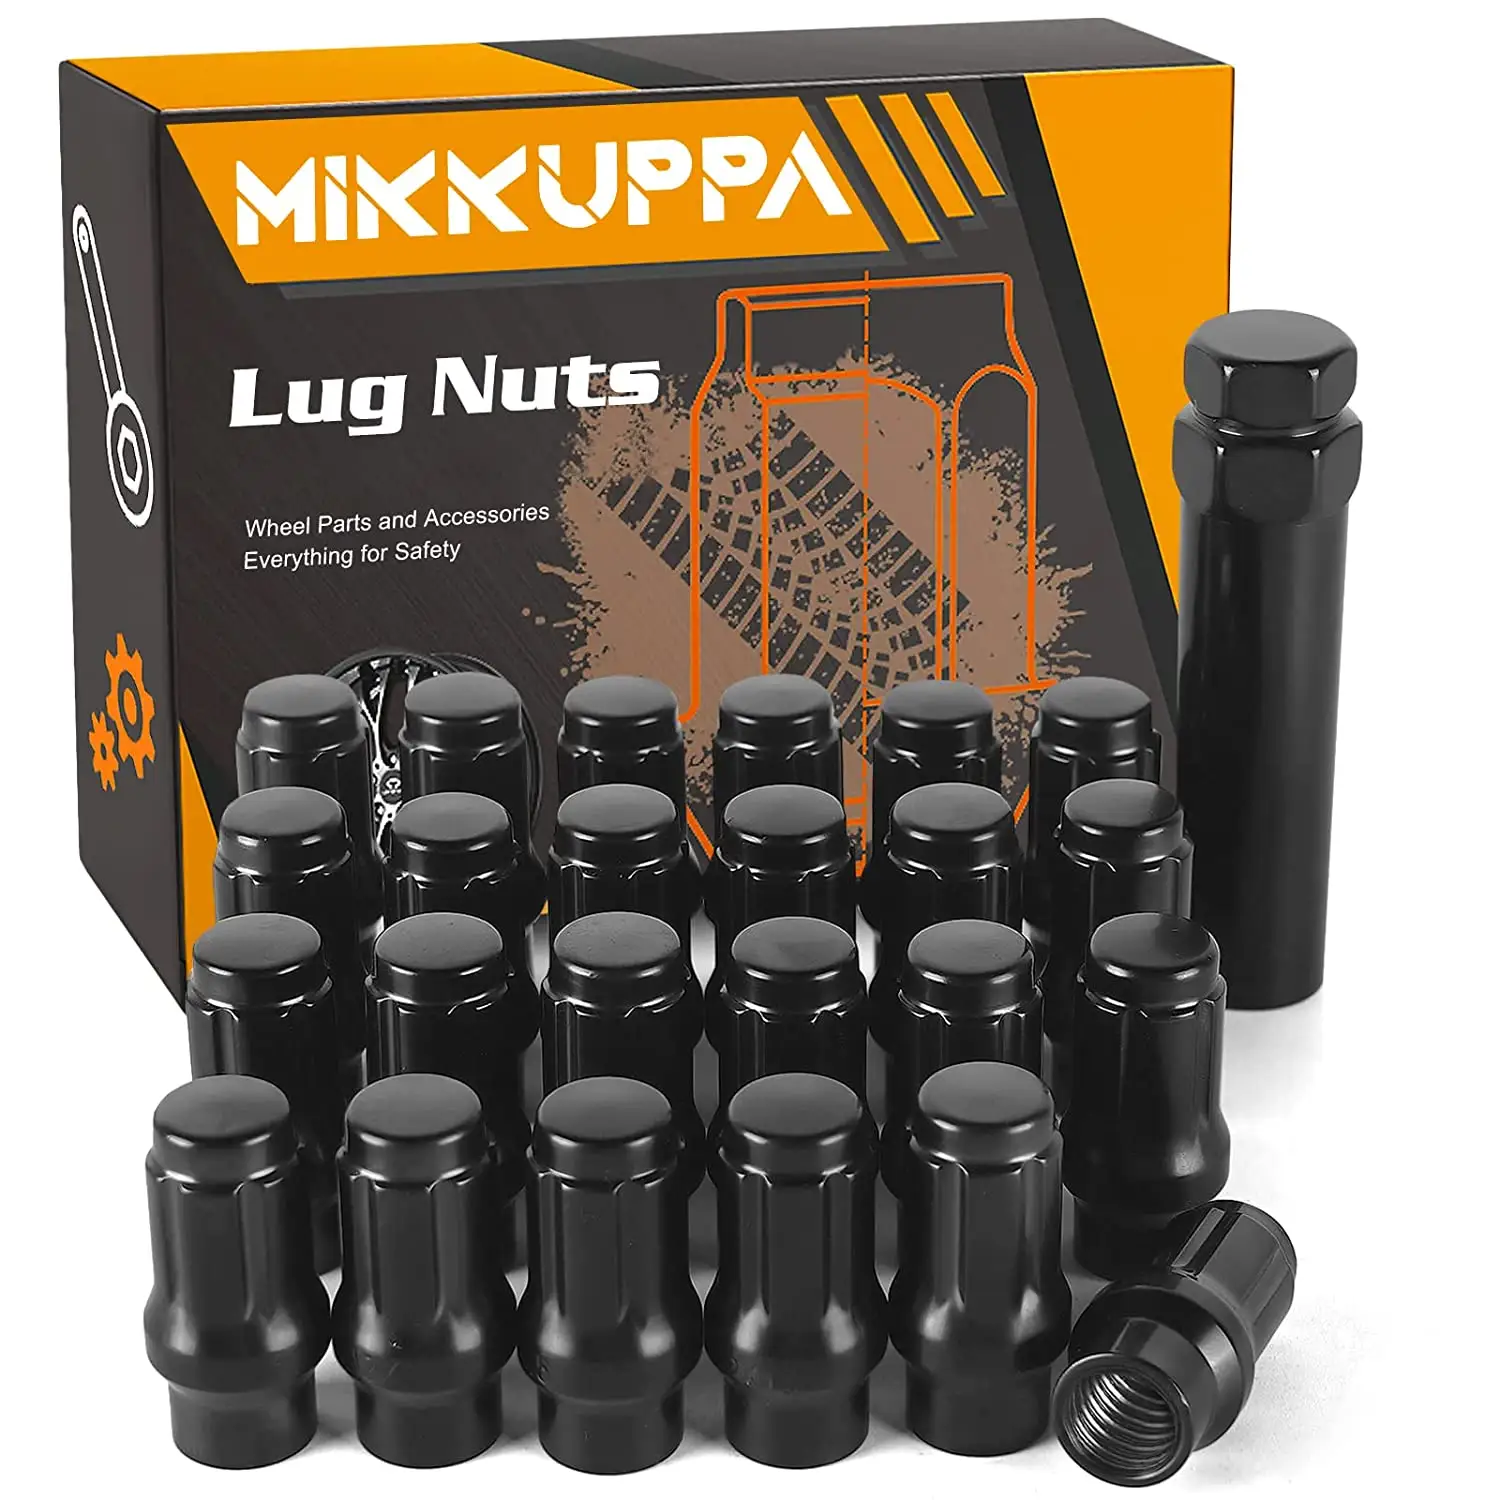 ALQLN091 MIKKUPPA High Quality 24pcs Extended Lug Nuts M12X1.5 Black Extended Thread Lug Nut